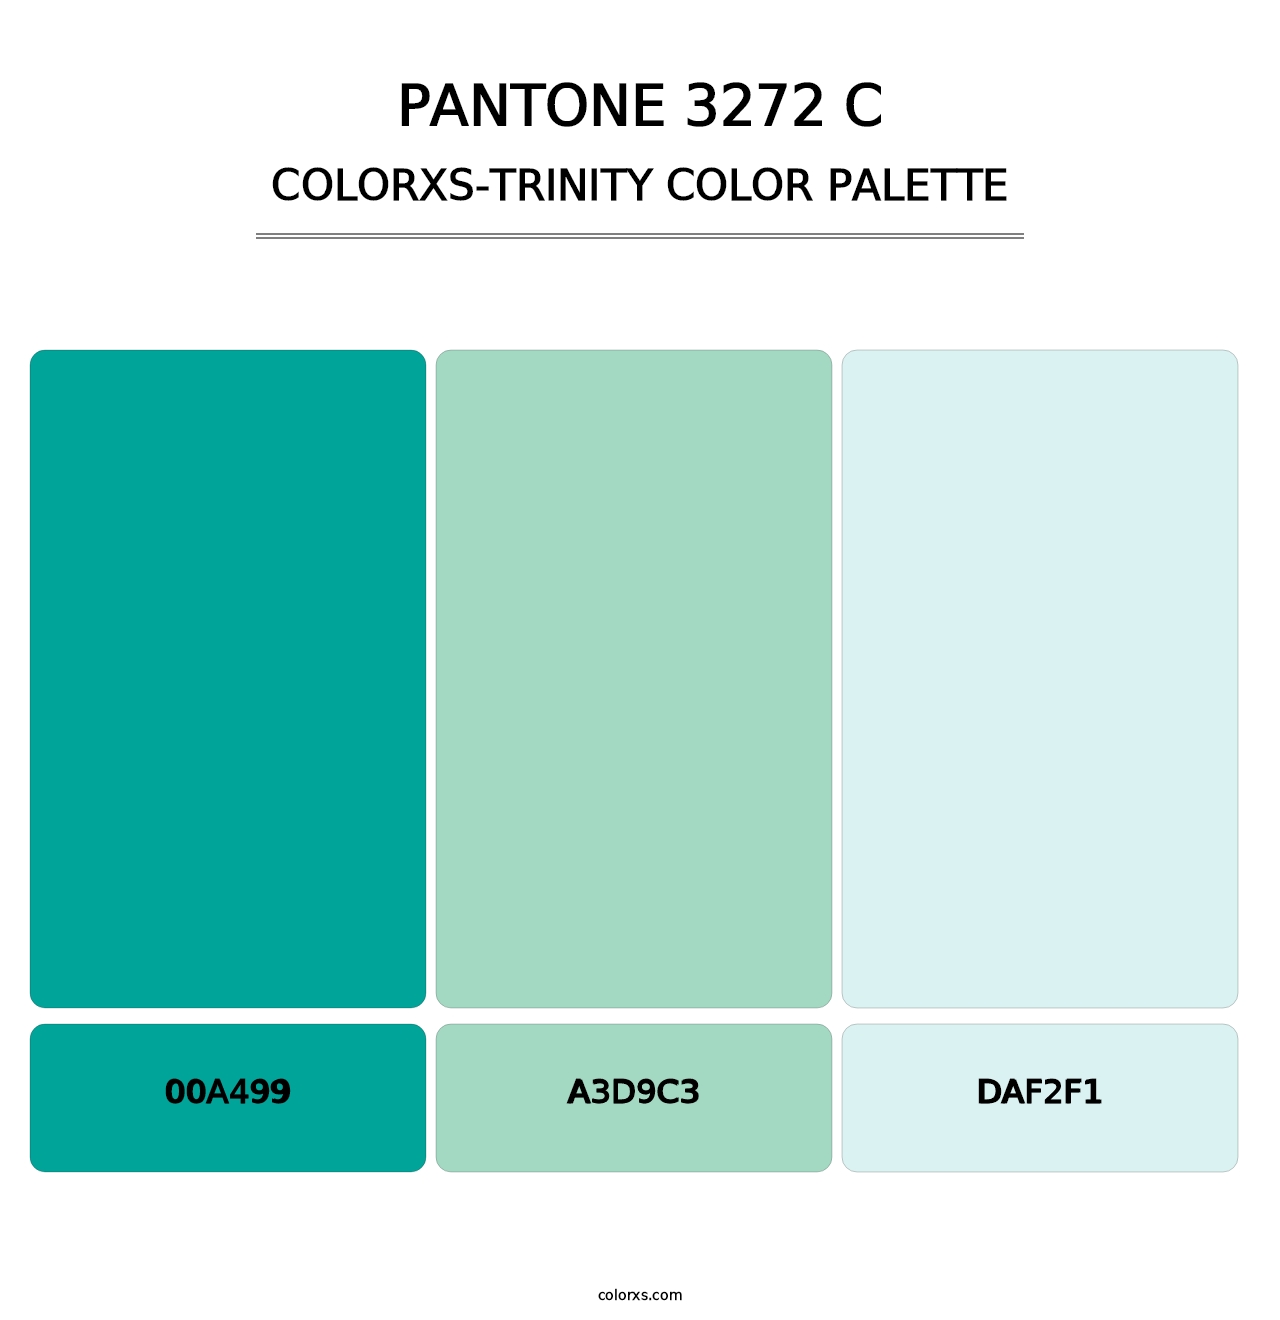 PANTONE 3272 C - Colorxs Trinity Palette